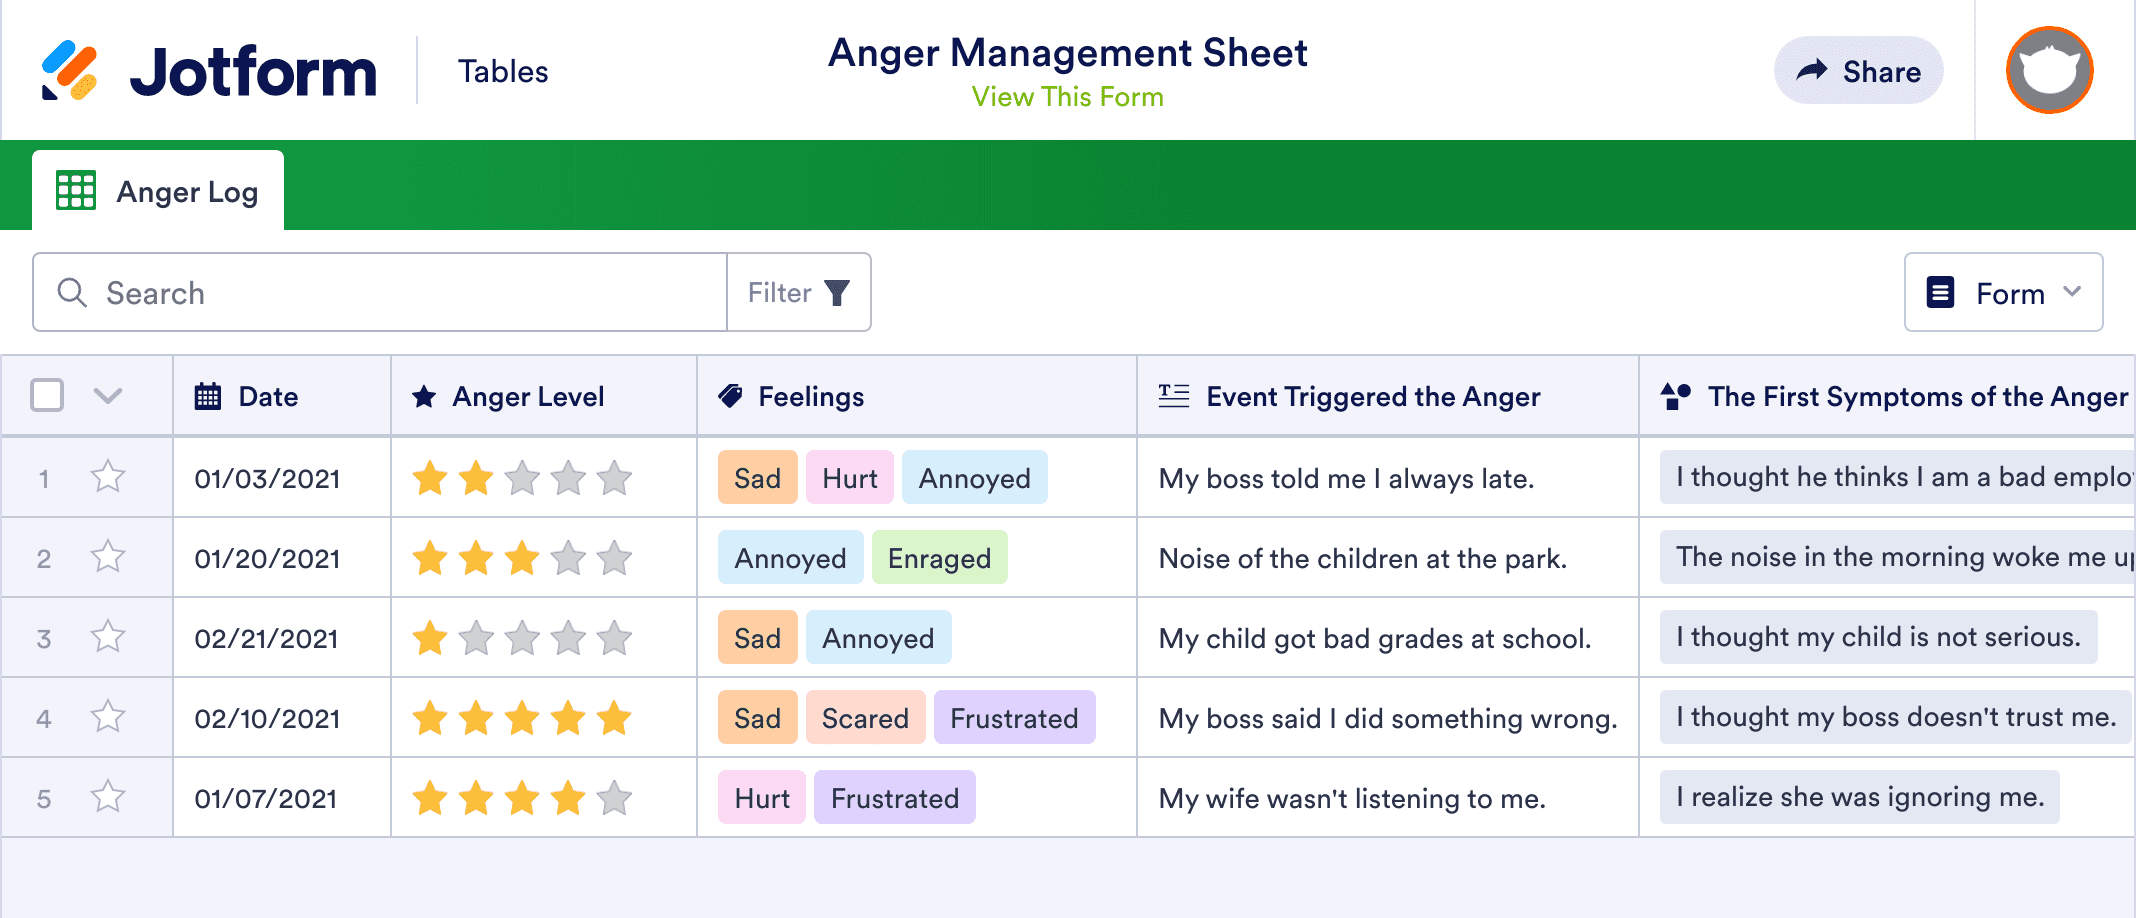 Anger Management Sheet